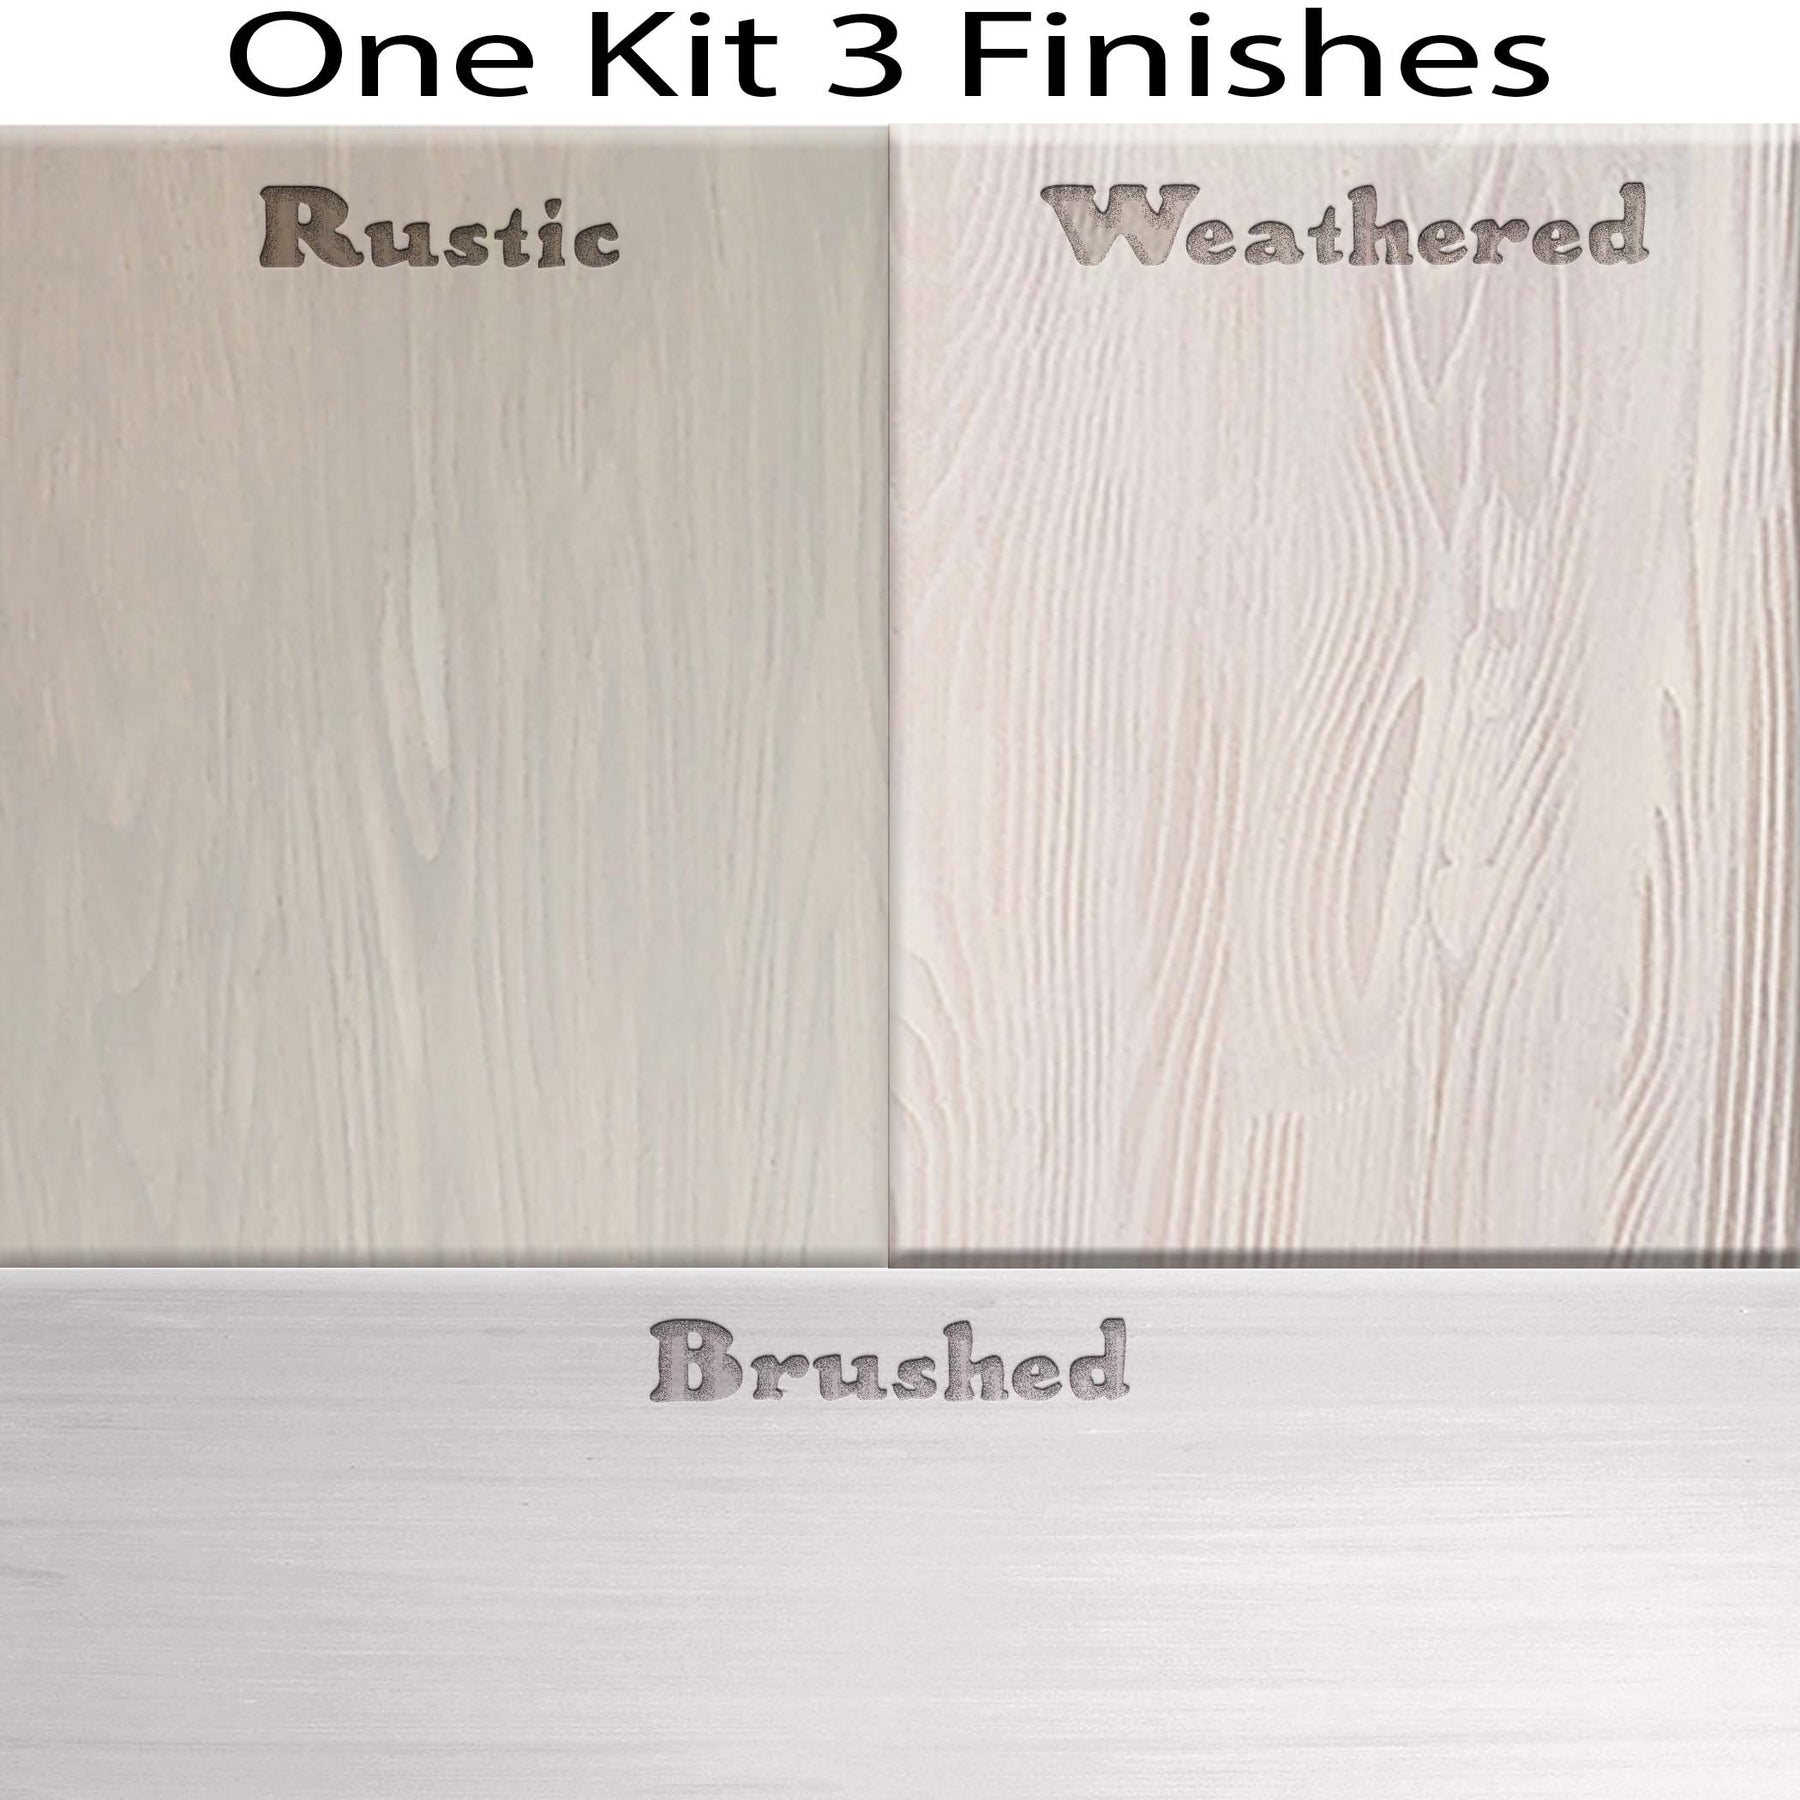 Wood'n Cabinet Kit (48 Door / Grained) - White Wash